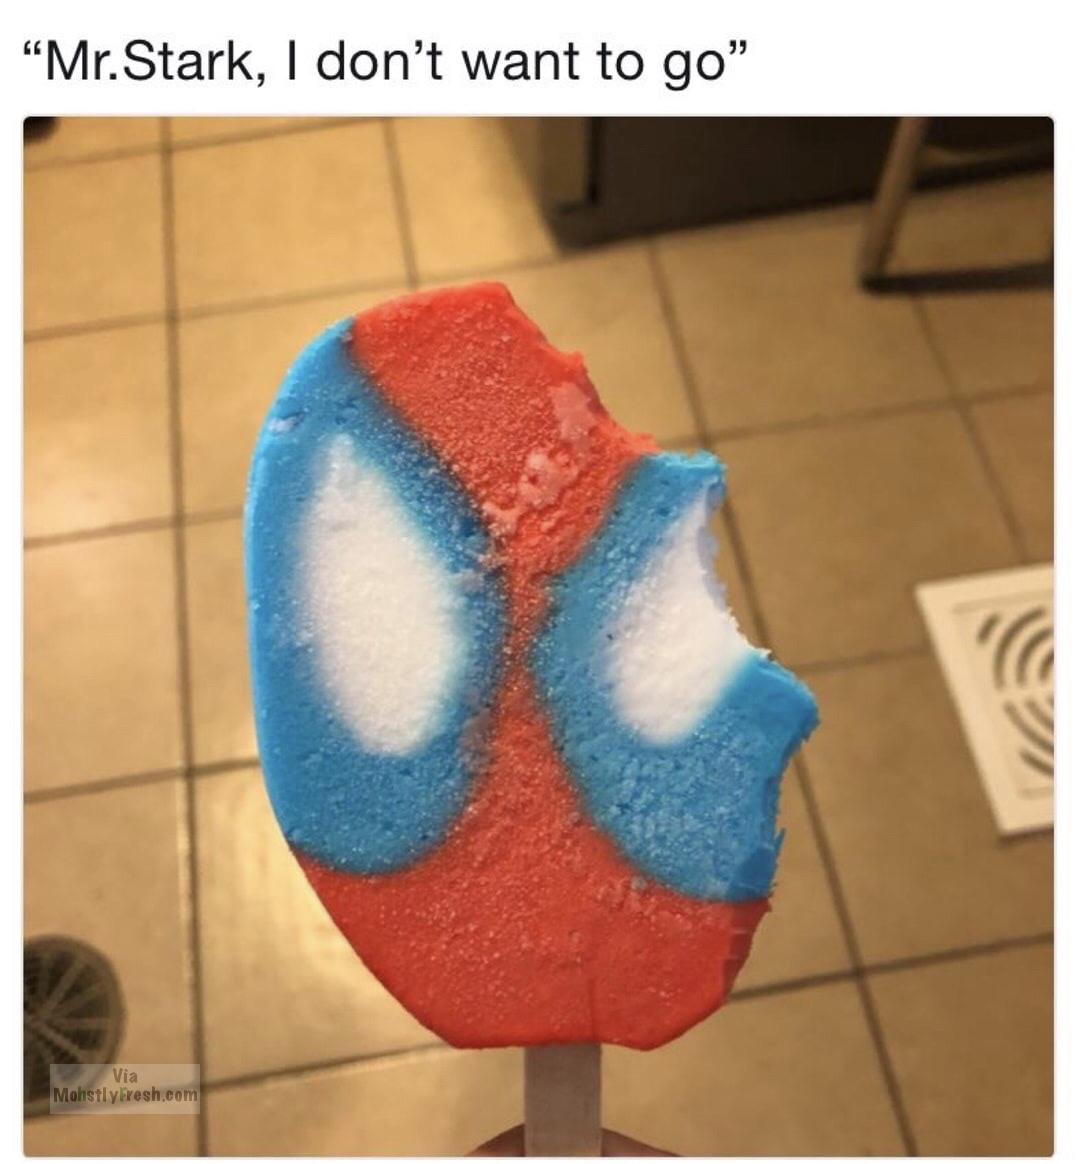 memes - mr stark i don t want to go ice cream - Mr.Stark, I don't want to go" Via Mohstly resh.com